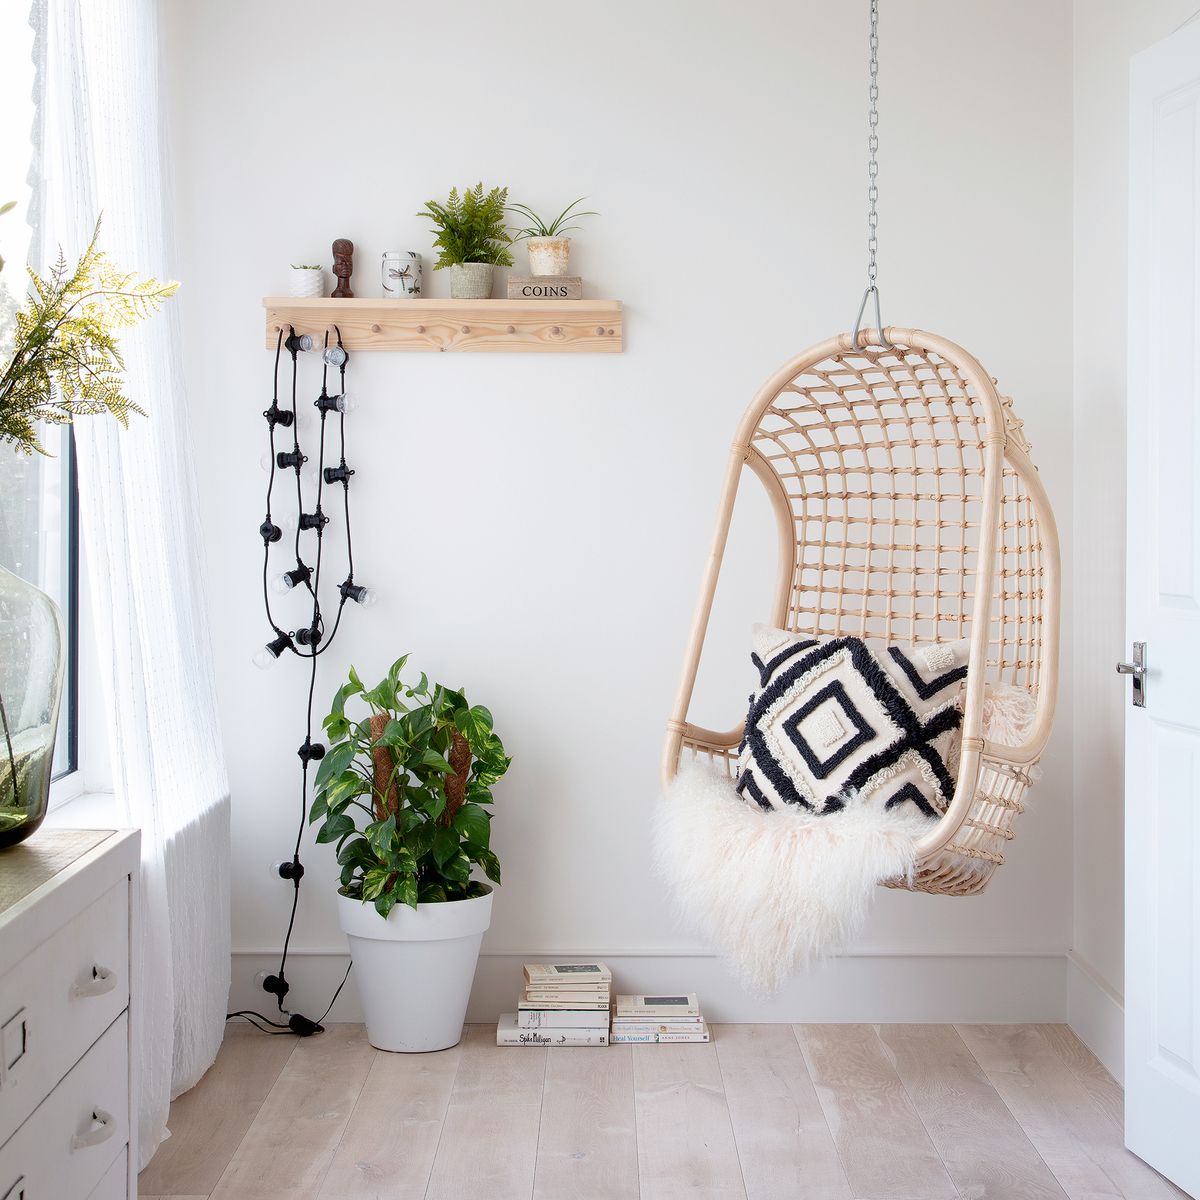 Boho bedroom ideas – 10 easy ways to create a relaxed vibe